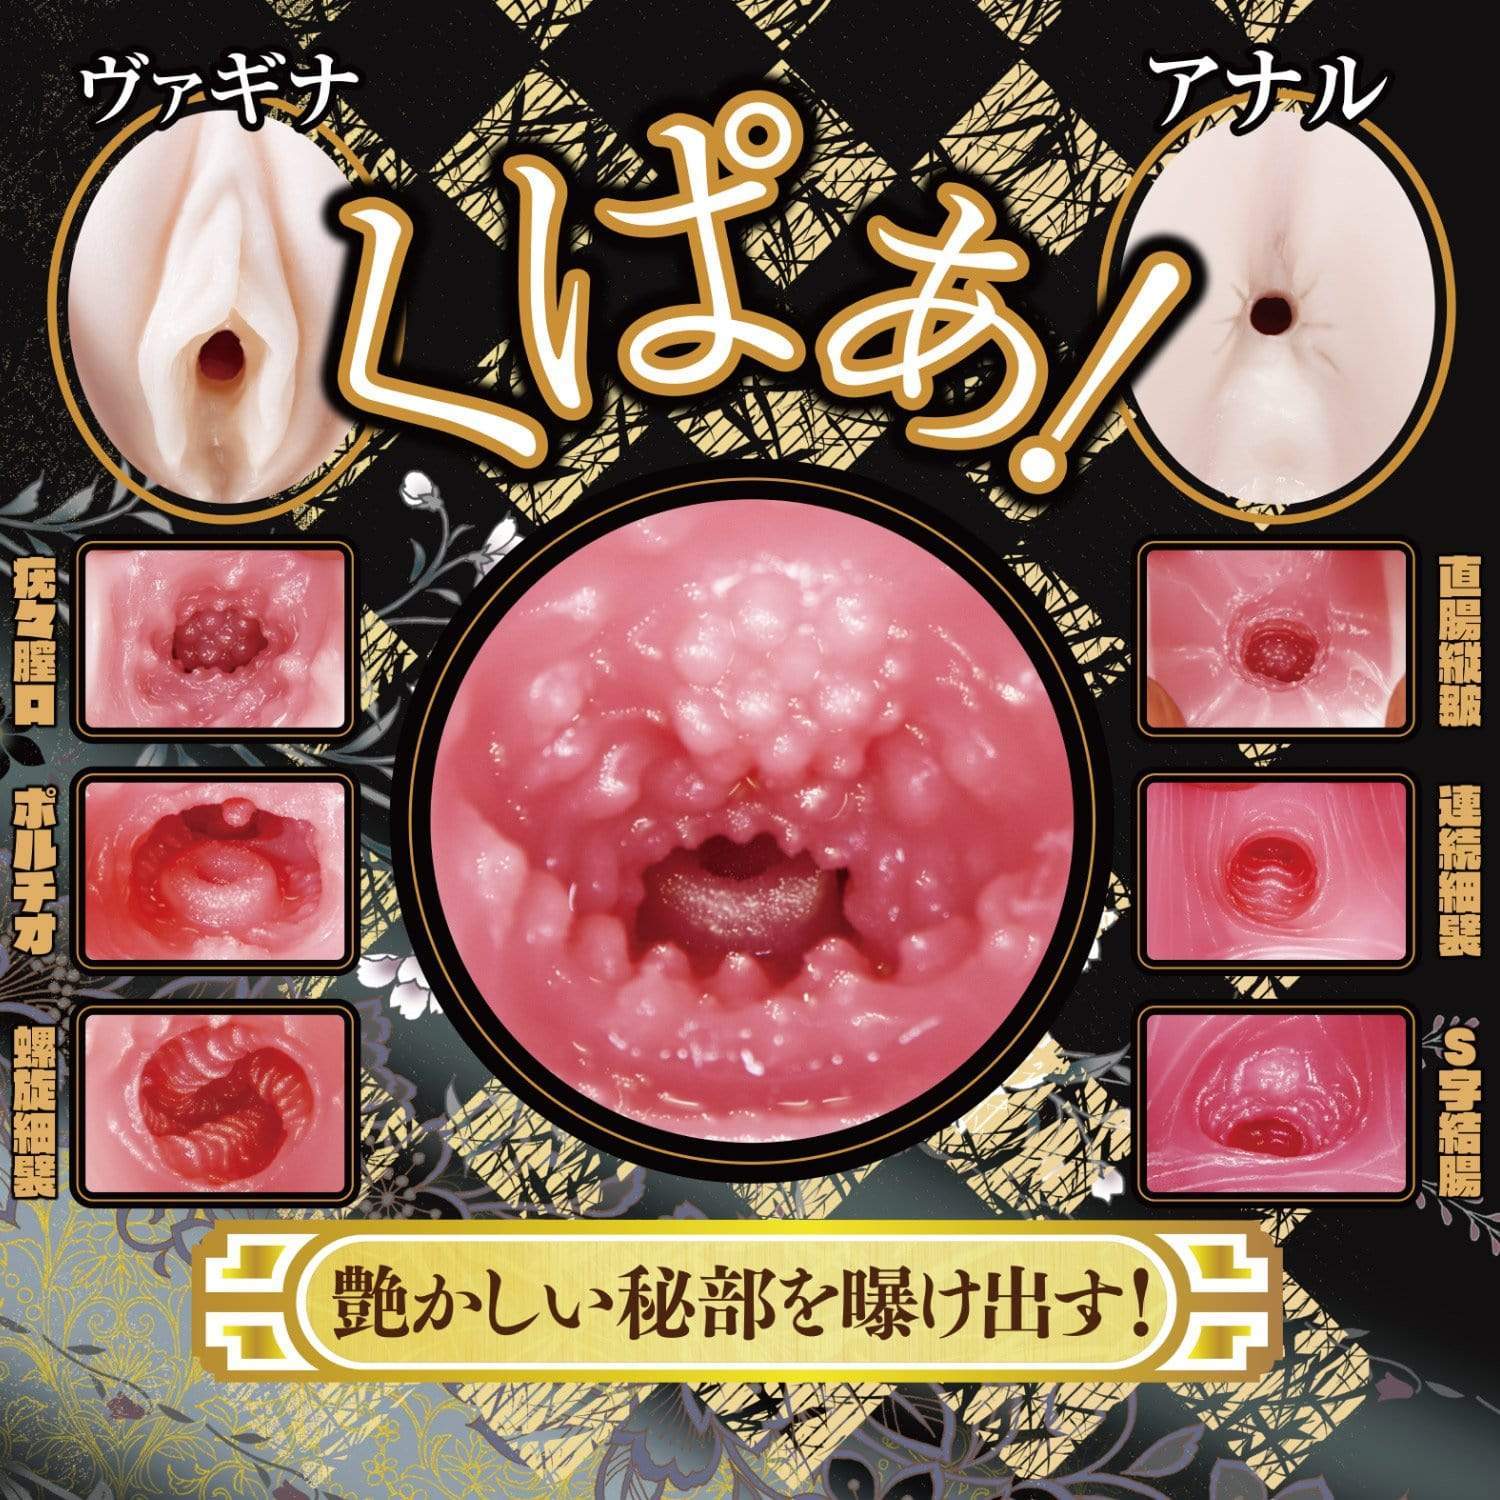 NPG - 2 Hole Third Generation Meiki Mizuno Waist Onahole Masturbator 6kg (Beige) -  Masturbator Vagina (Non Vibration)  Durio.sg